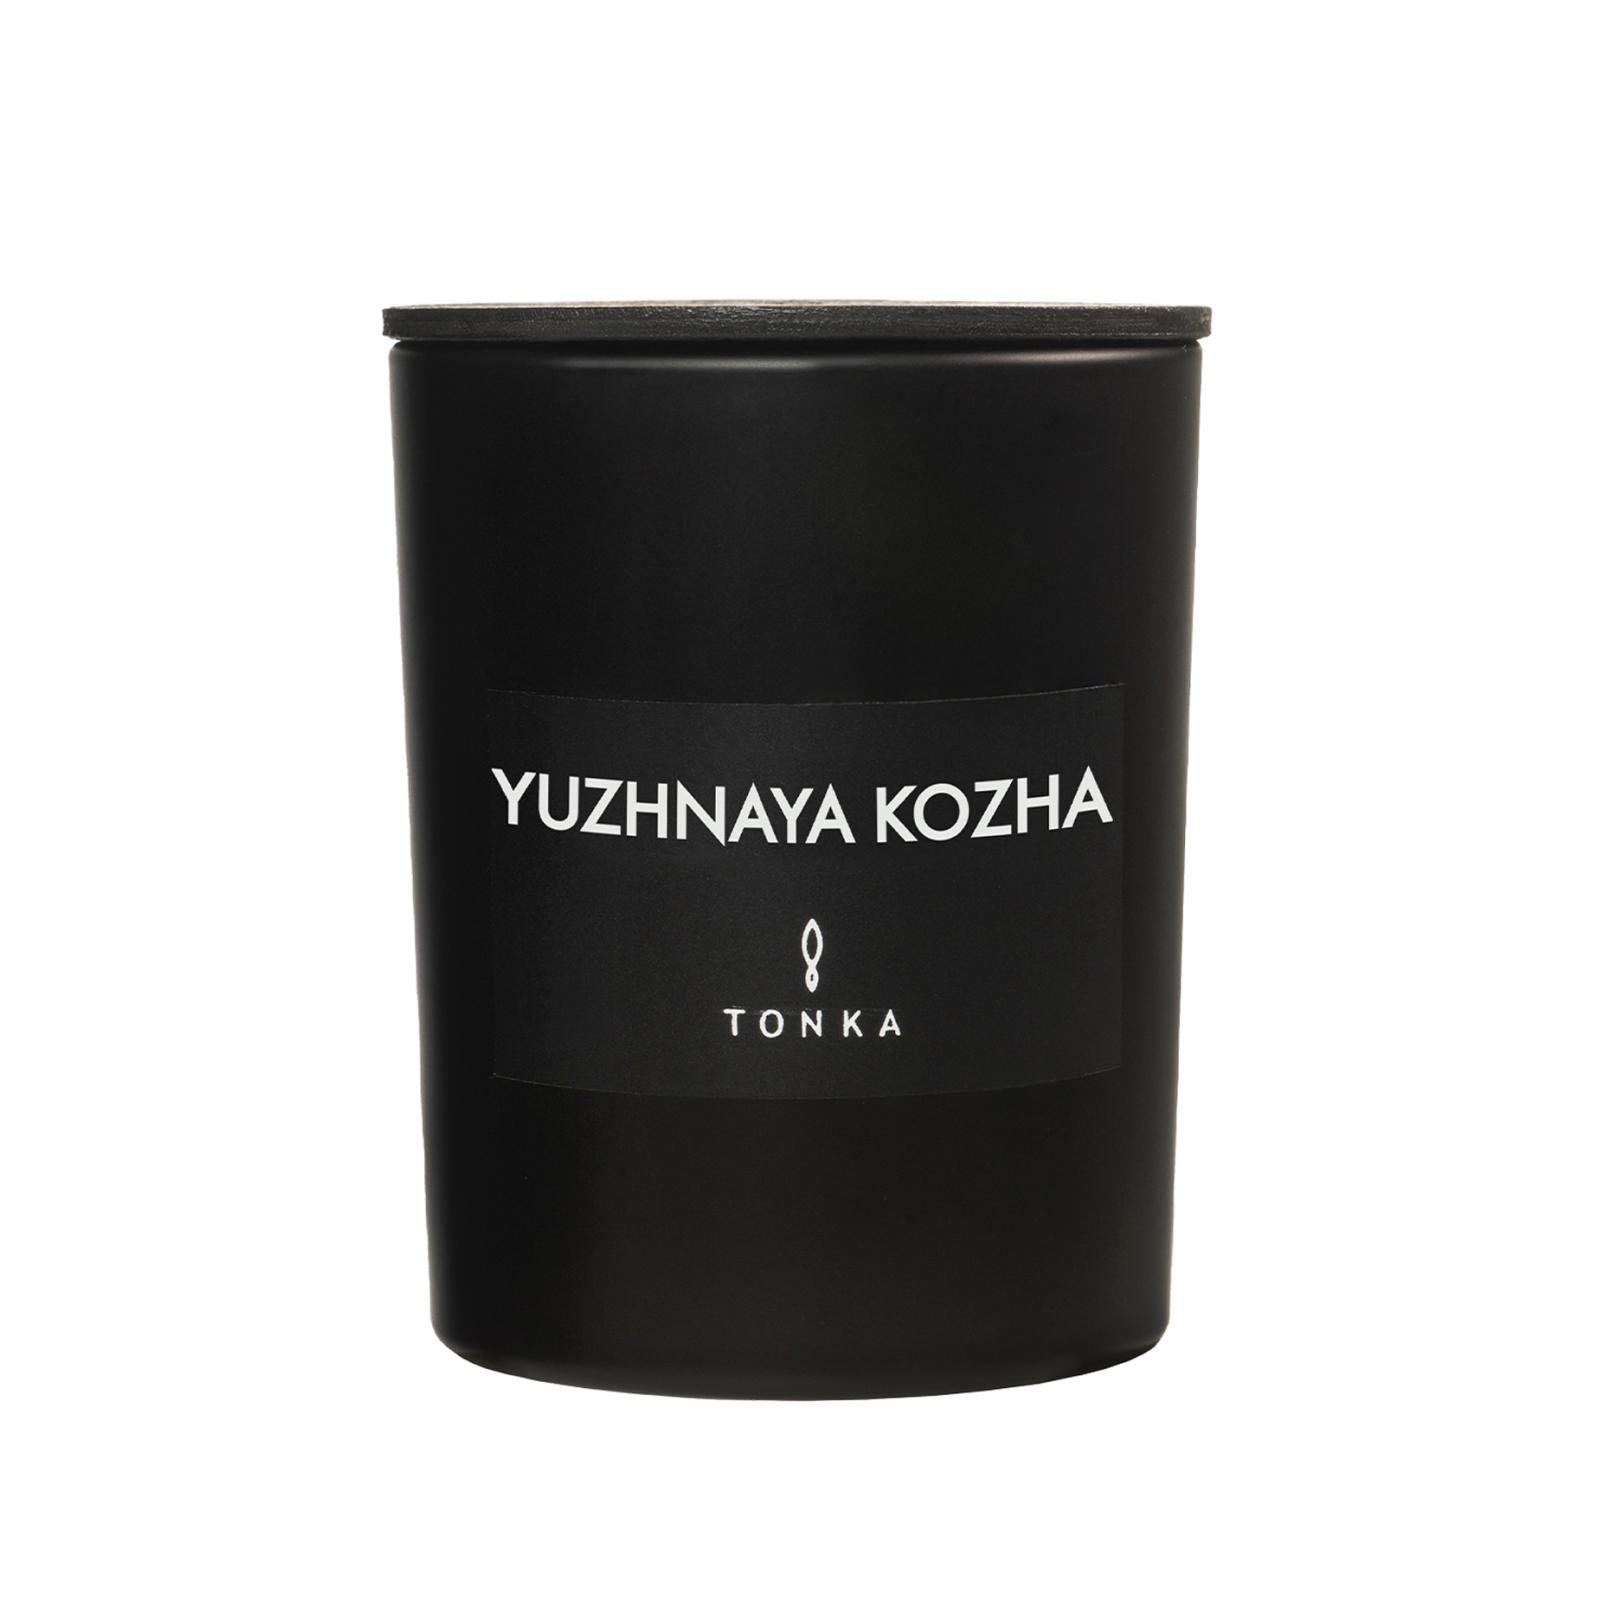 Свеча Yuzhnaya kozha, Tonka Perfumes Moscow, 3500 руб. (tonkaperfumes.ru)